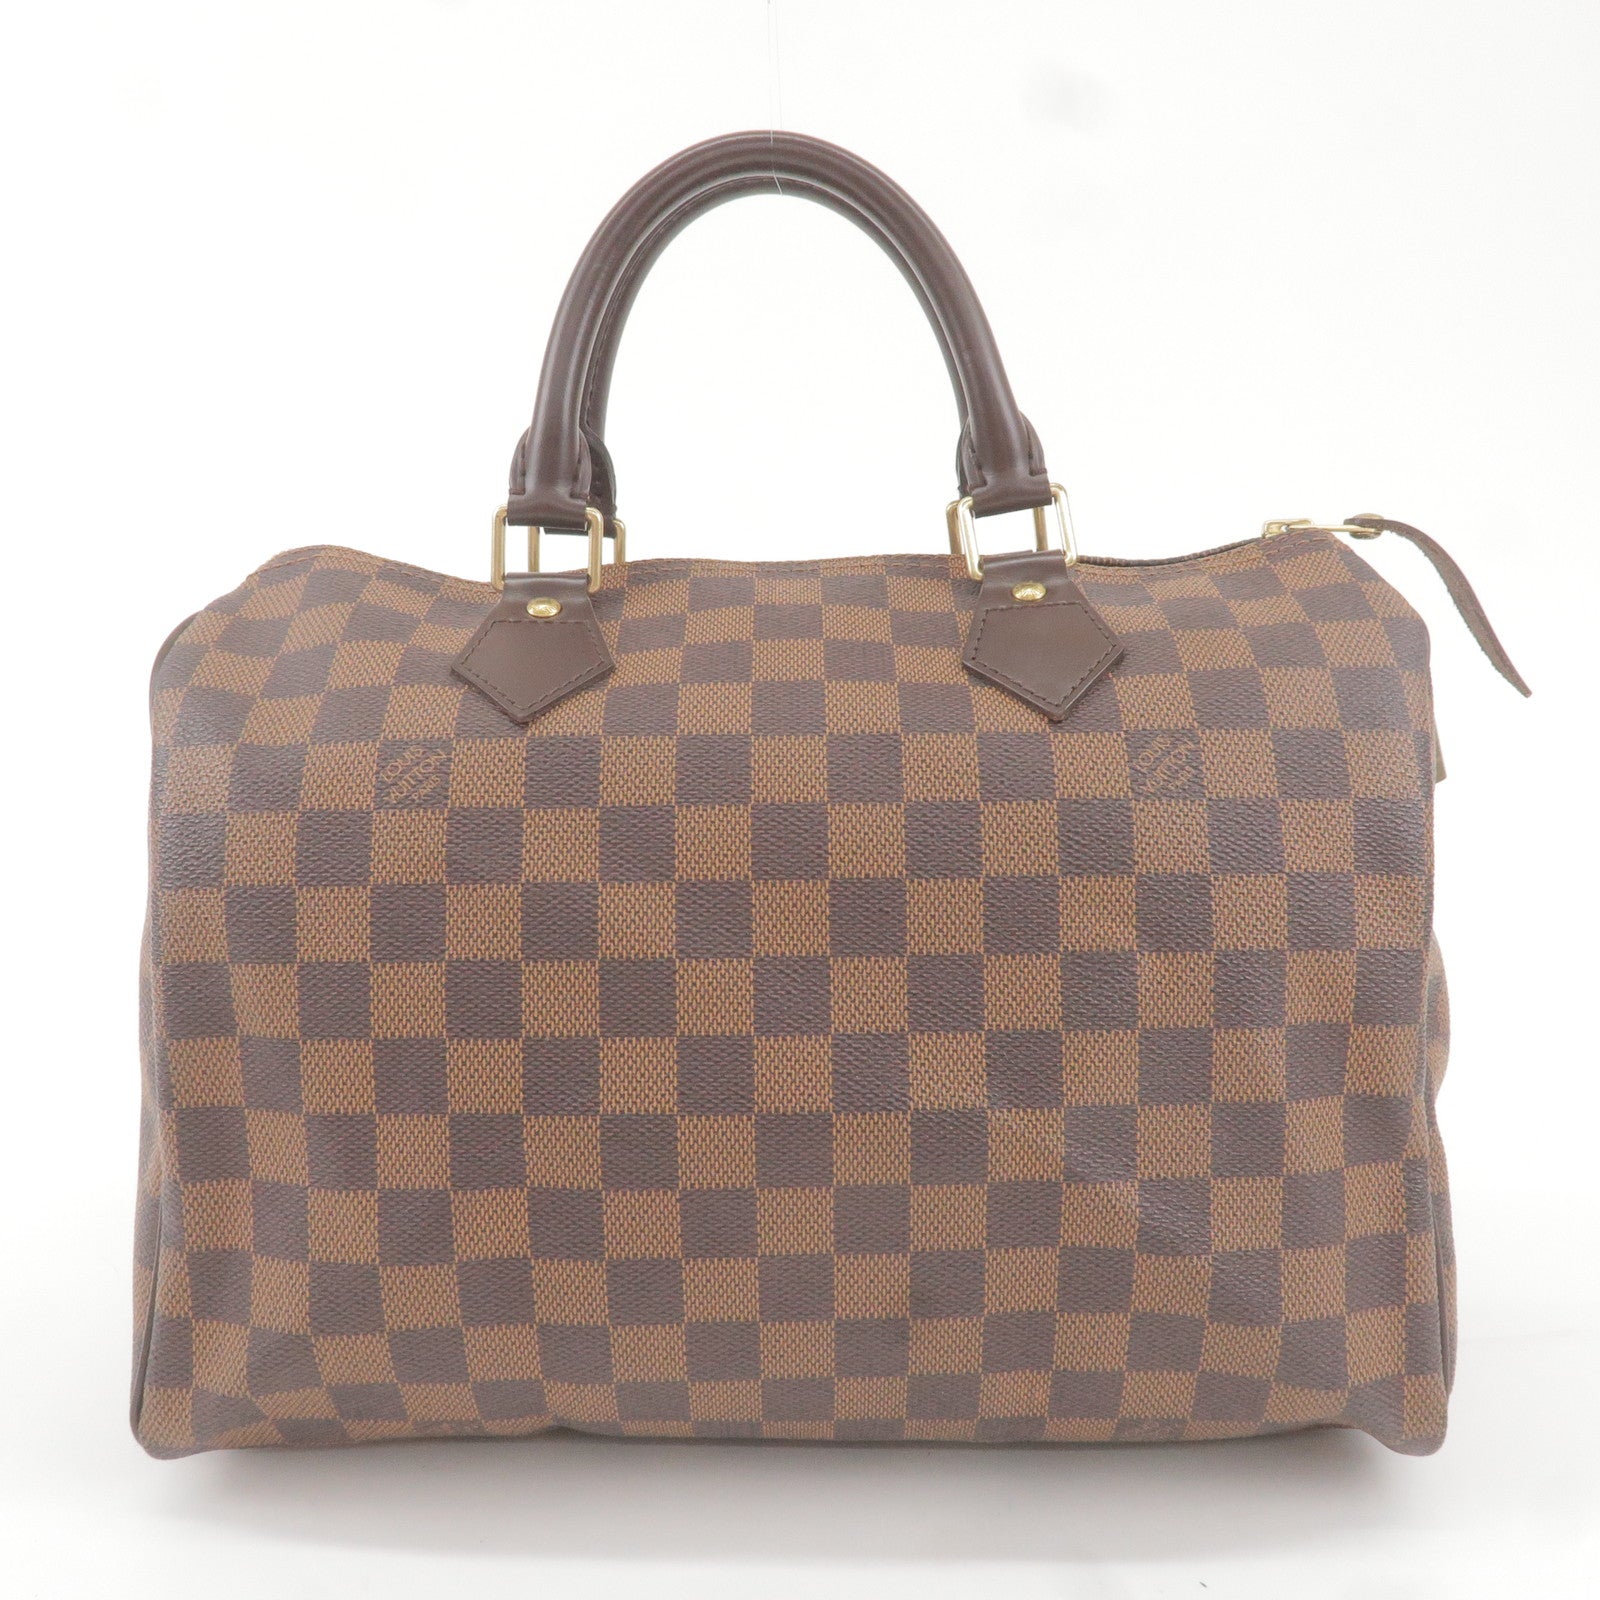 Louis Vuitton Speedy 30 Damier Ebene Bag Review 